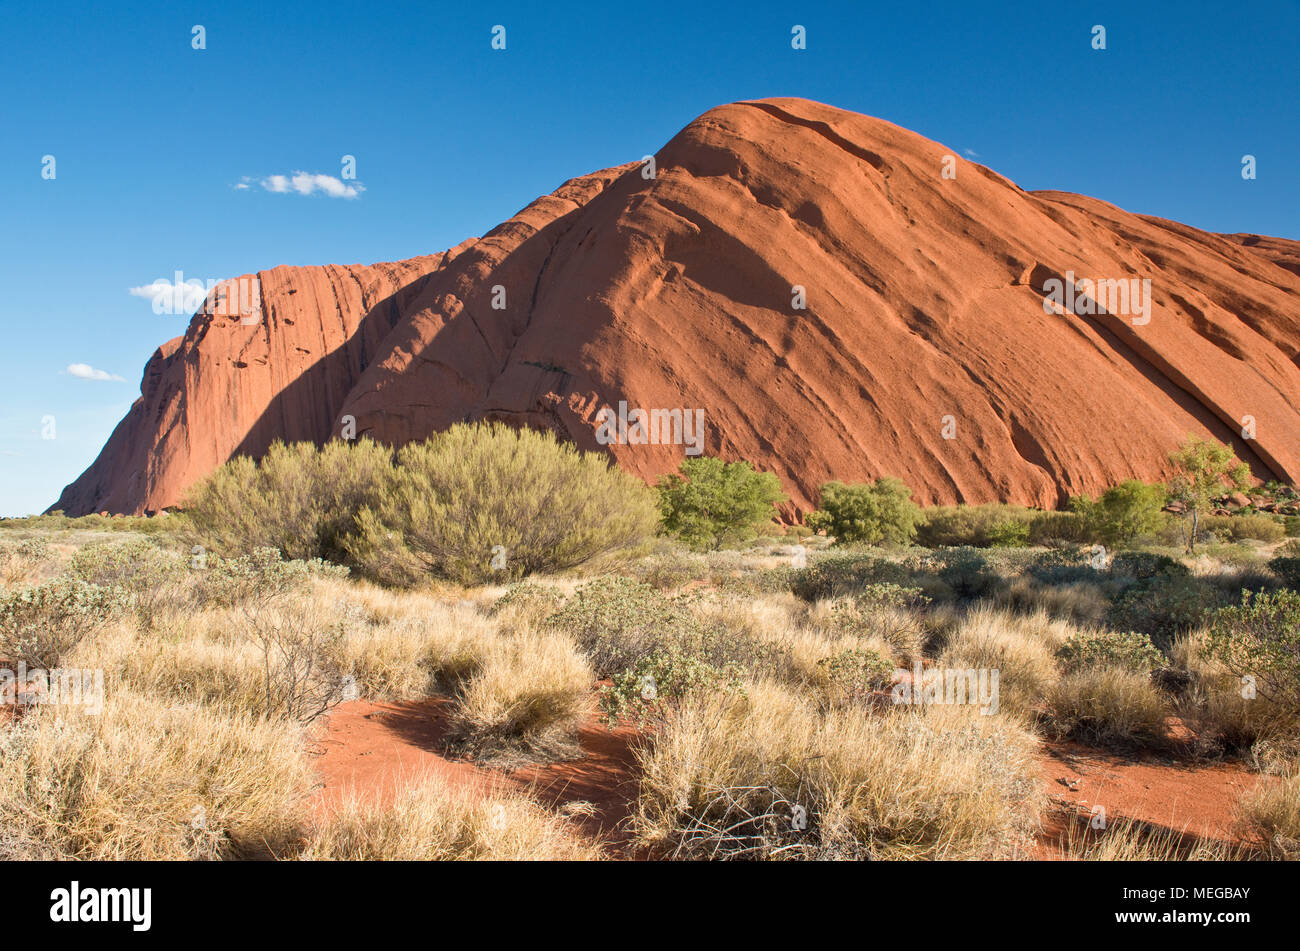 Prominent sedimentary layers visible in the rock face of Uluru (Ayers Rock). Uluṟu-Kata Tjuṯa National Park. Northern Territory, Australia. Stock Photo